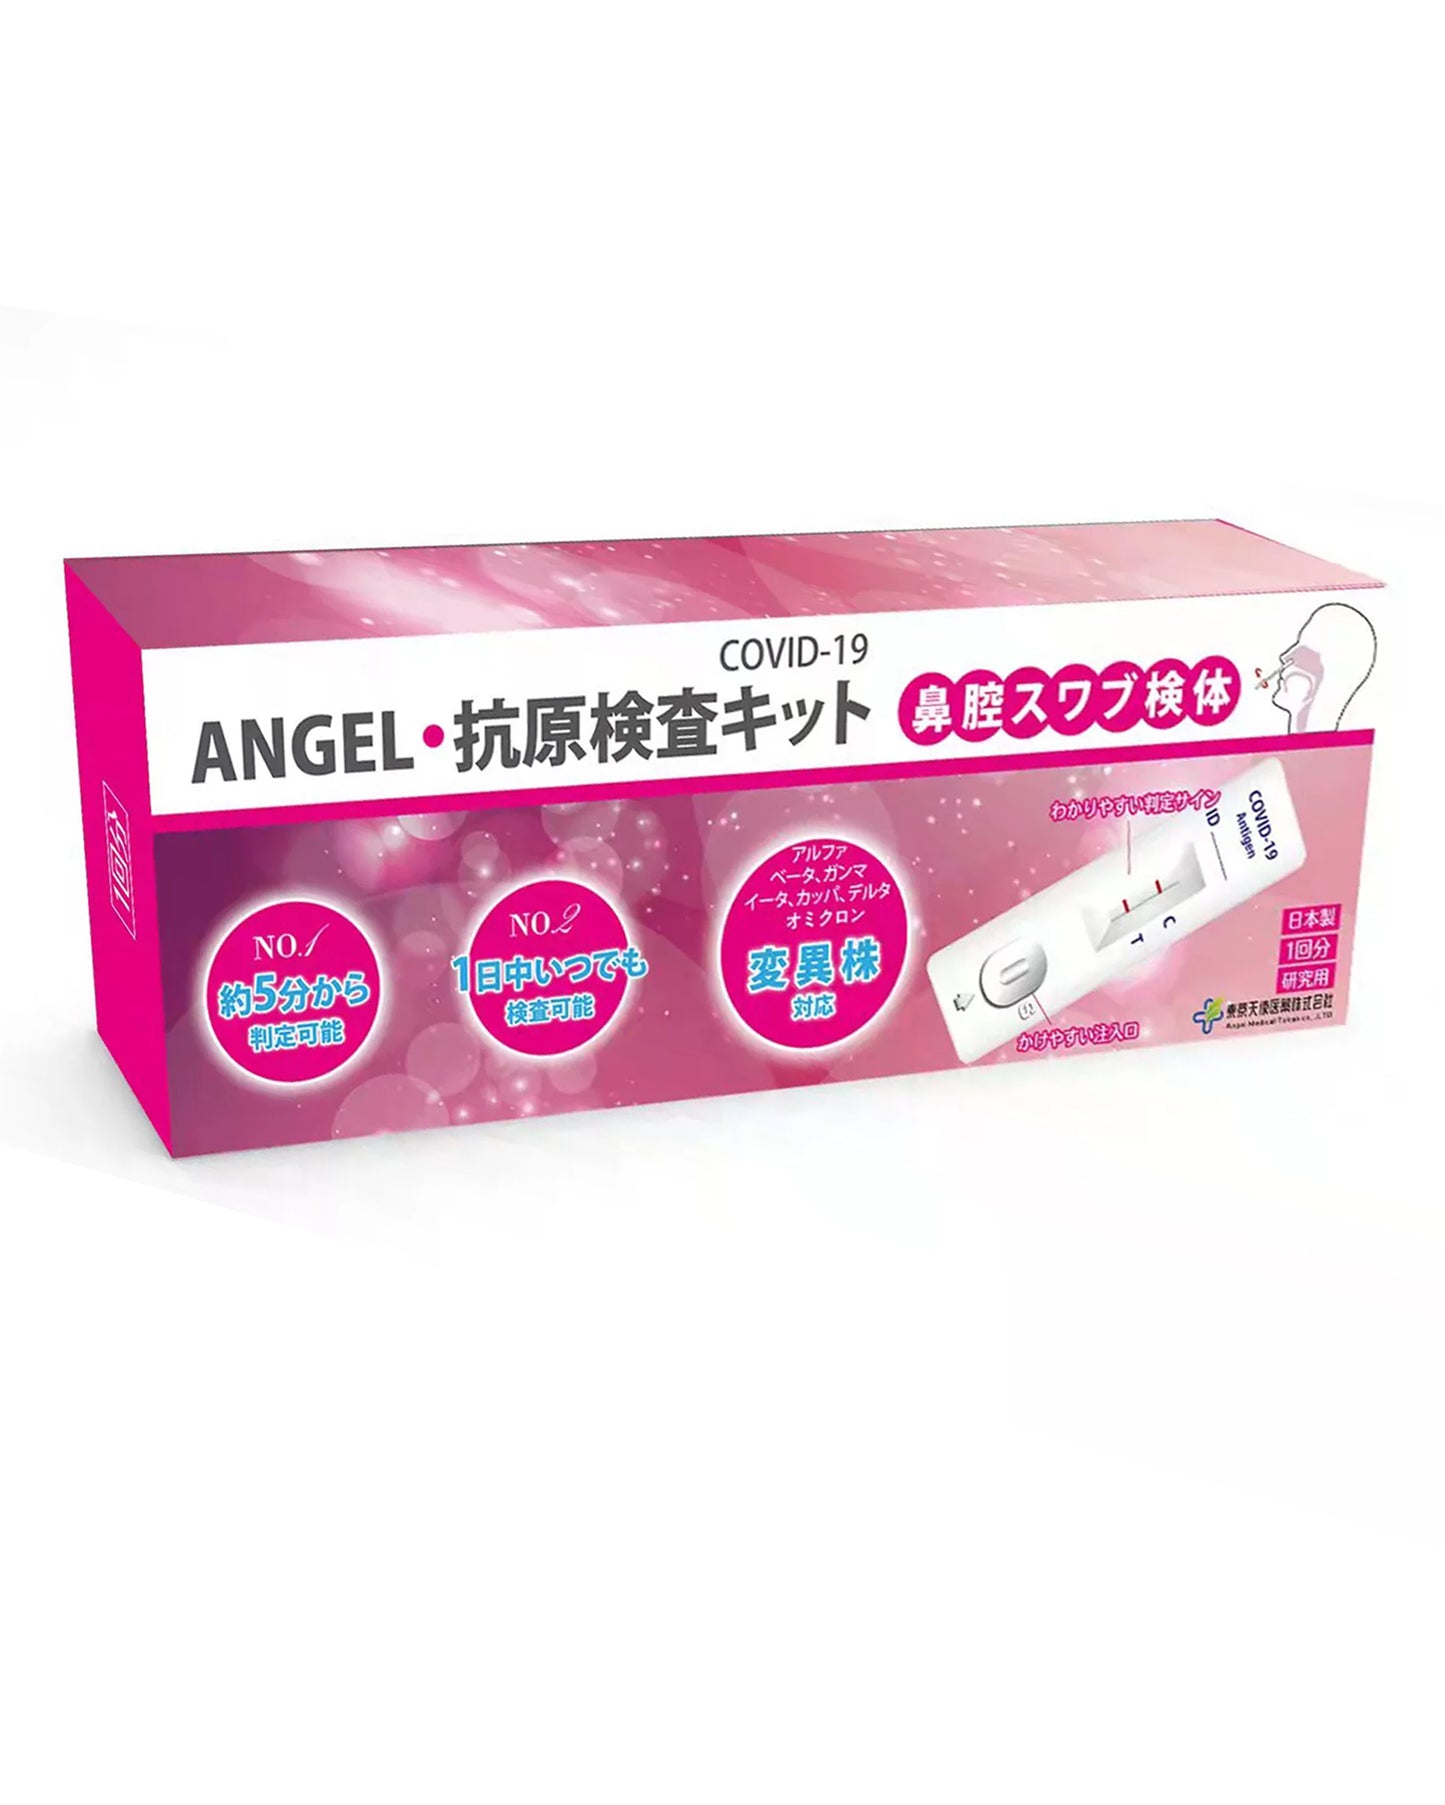 COVID-19 ANGEL 抗原検査キットTK001（研究用 1 回分入）日本製